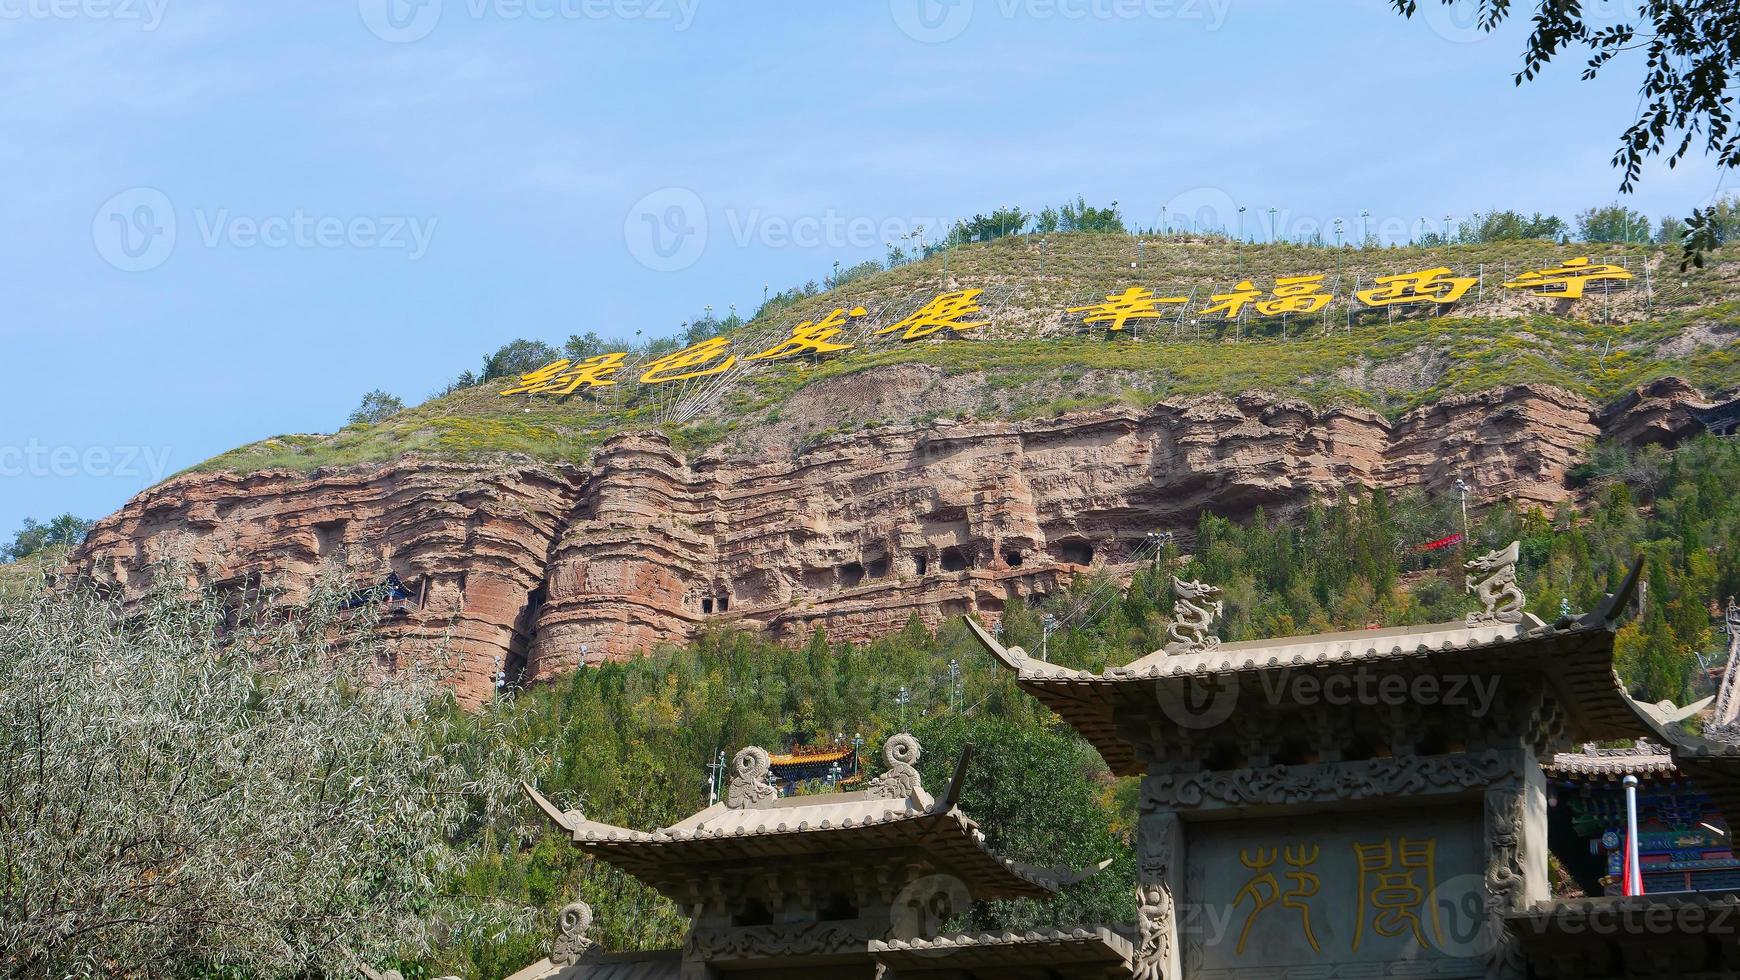 tulou tempio della montagna beishan, tempio yongxing in cina xining. foto